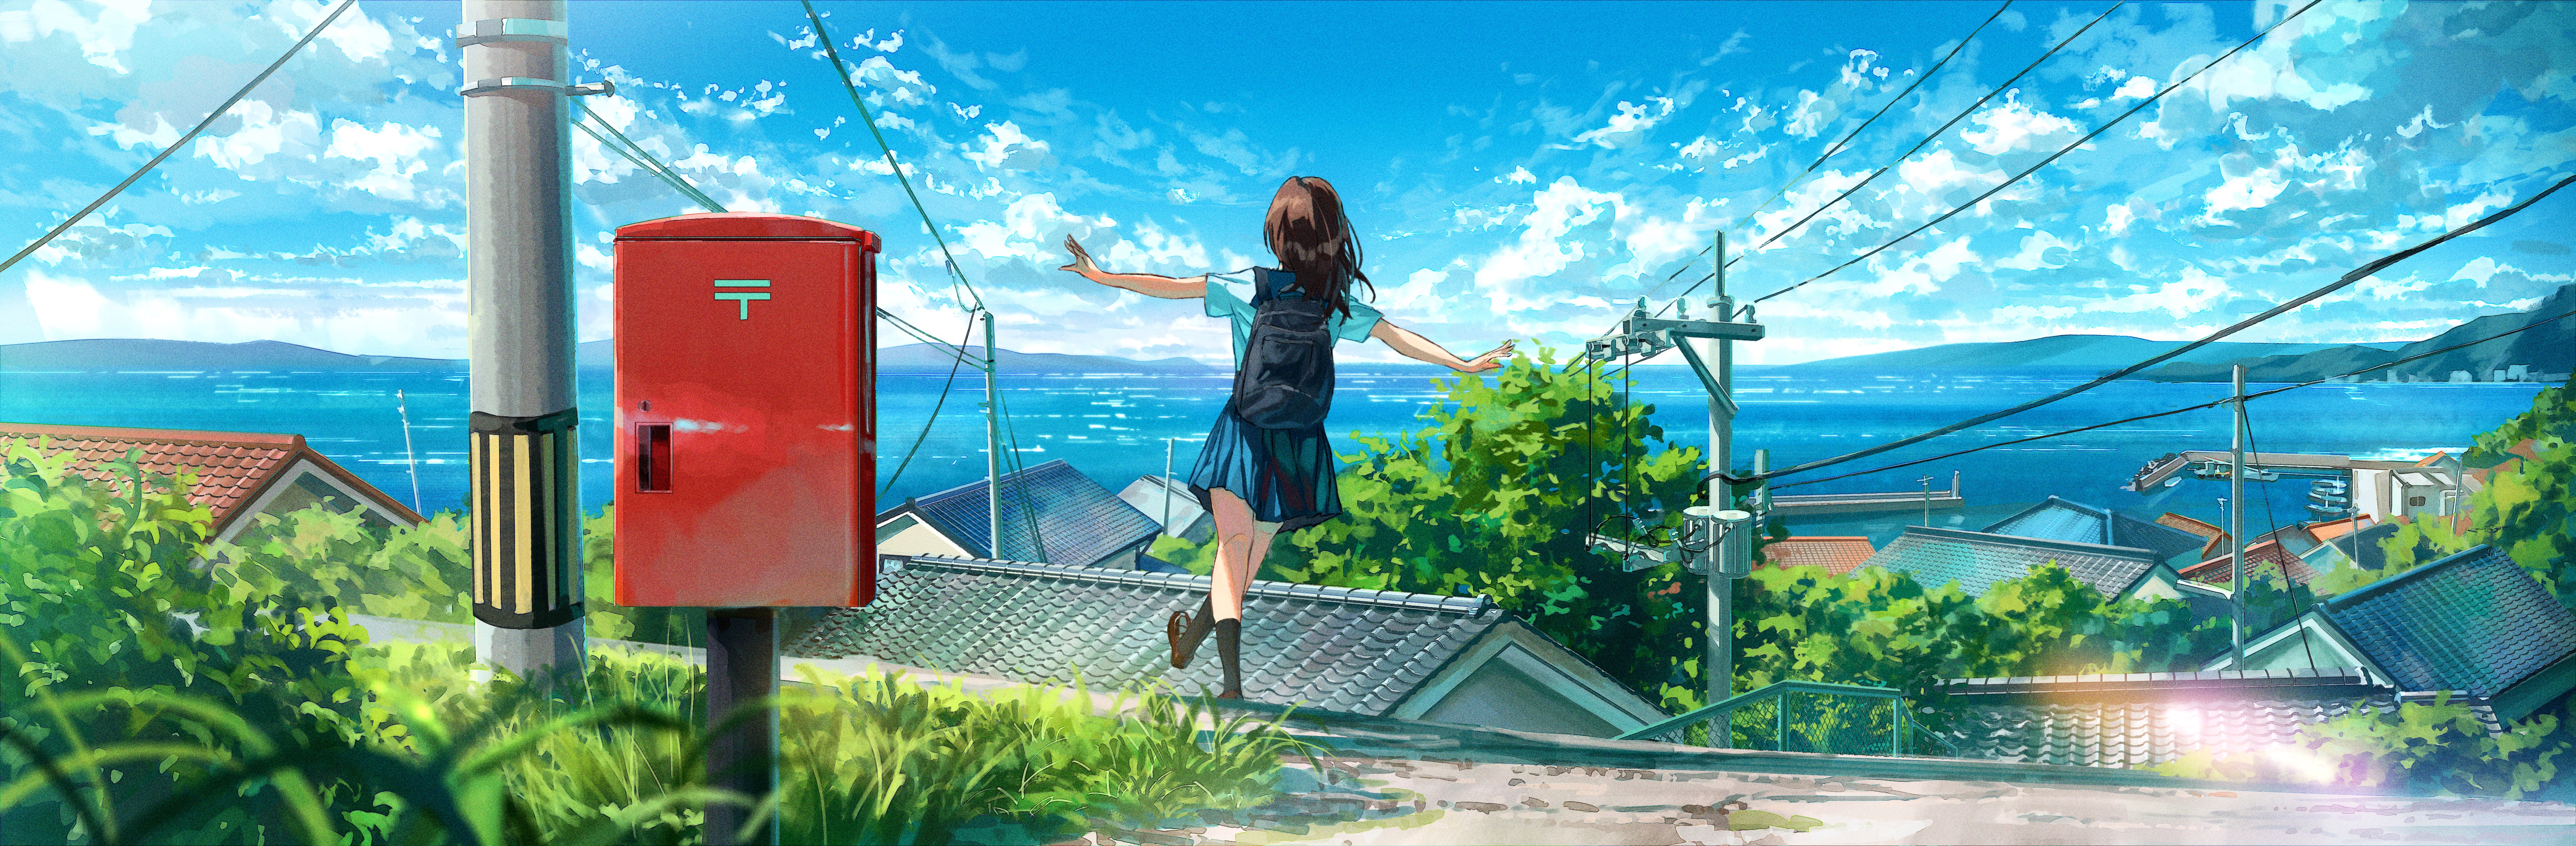 Anime Anime Girls Schoolgirl School Uniform Clouds Water Sky Village Wires Grass 6741x2213